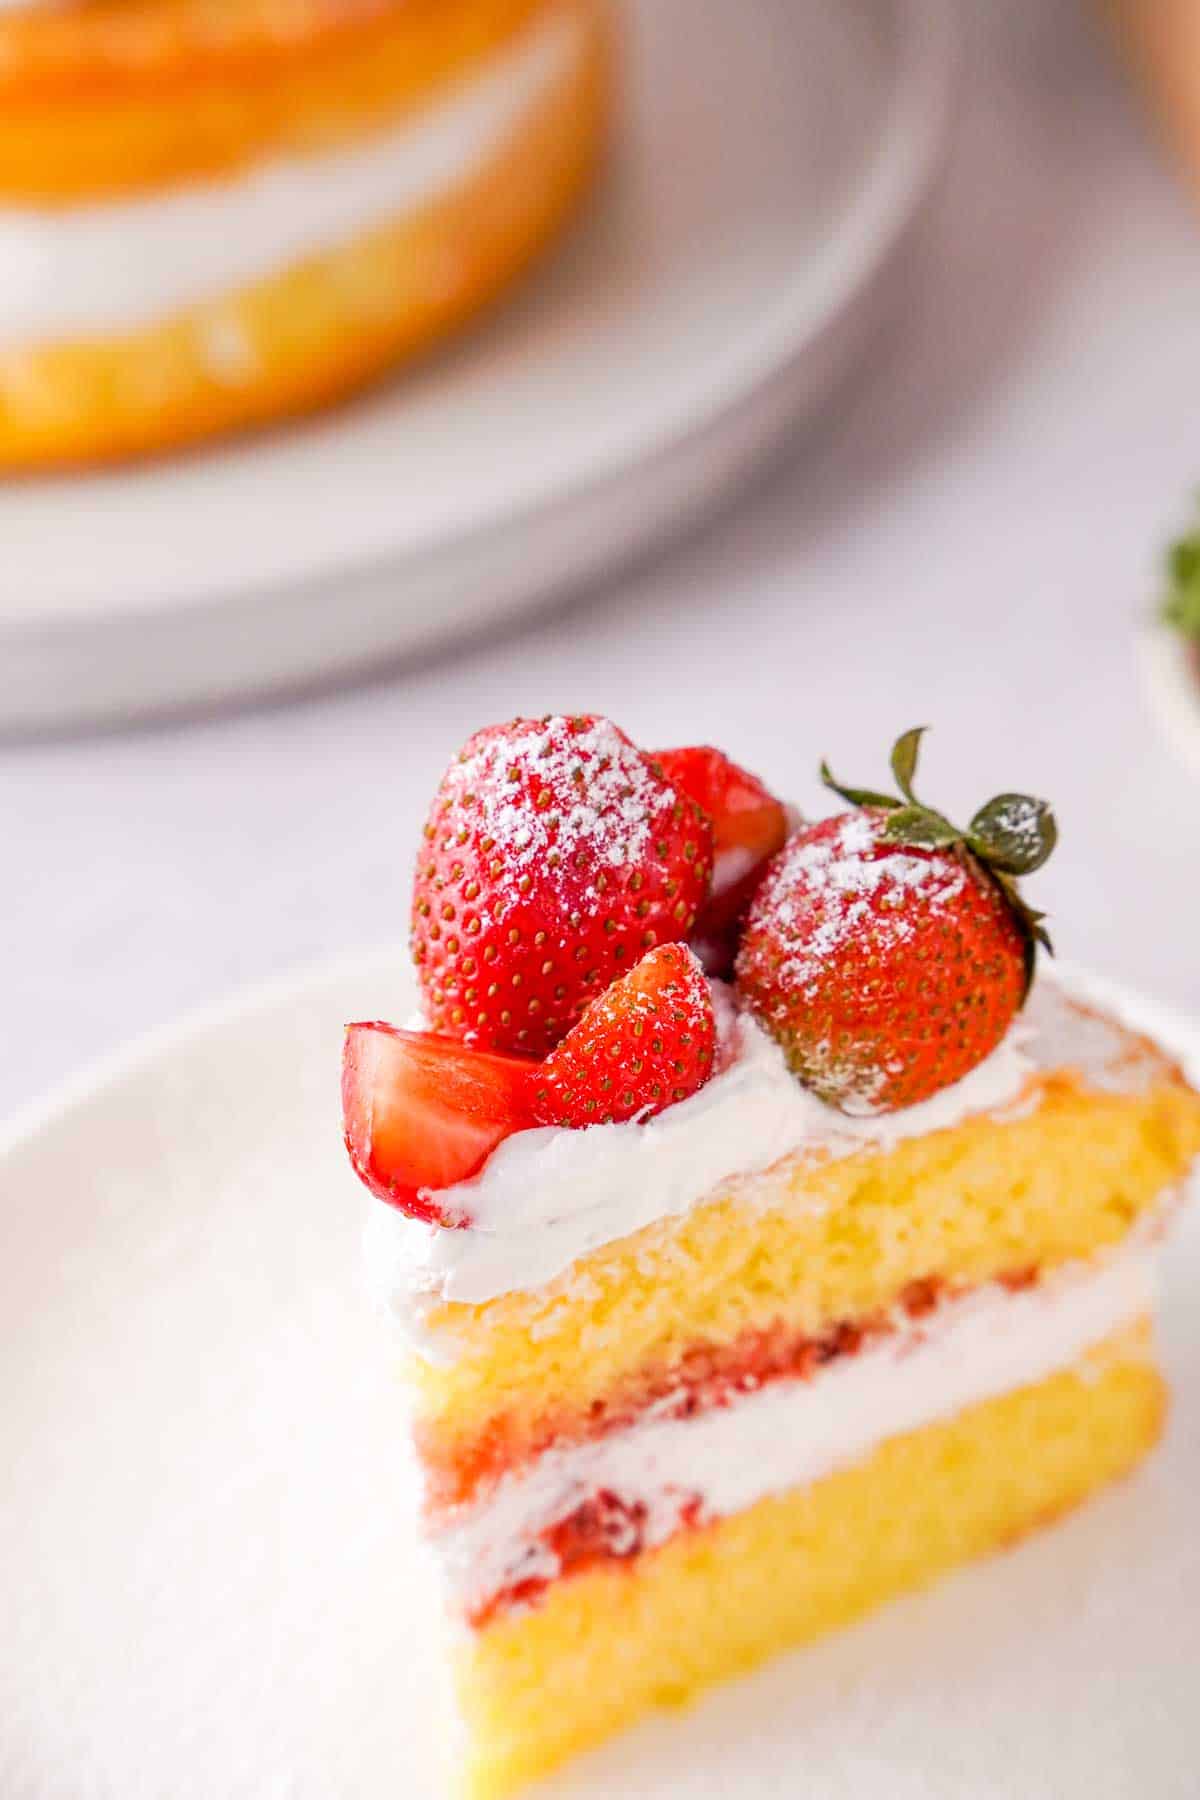 A slice of strawberry Victoria sponge cake on a white plate.